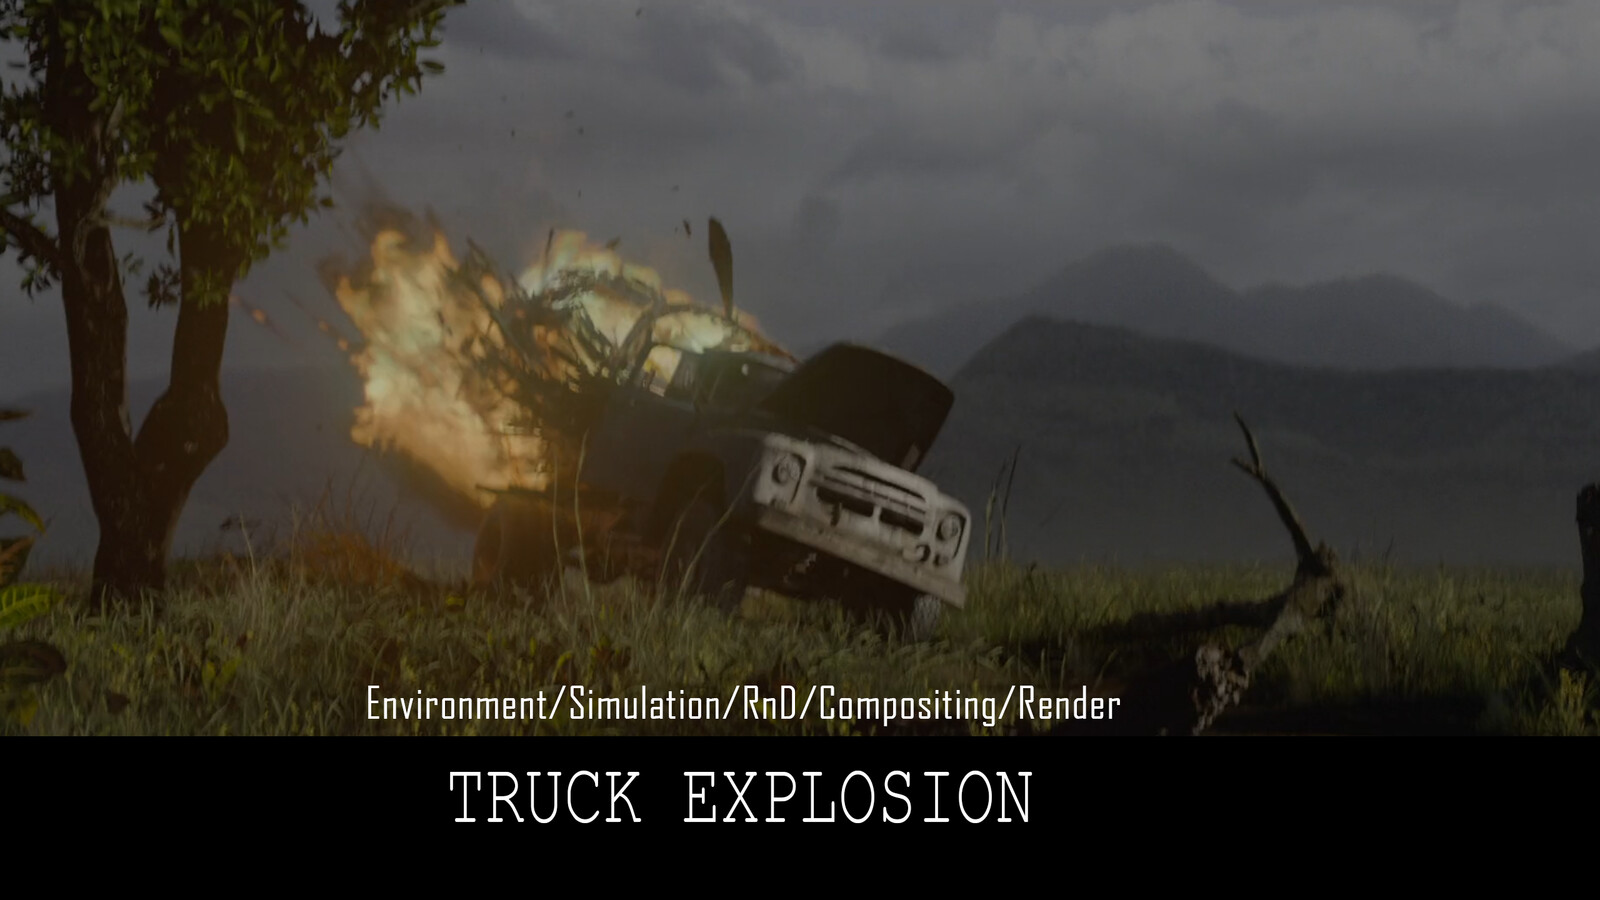 __Truck Explosion